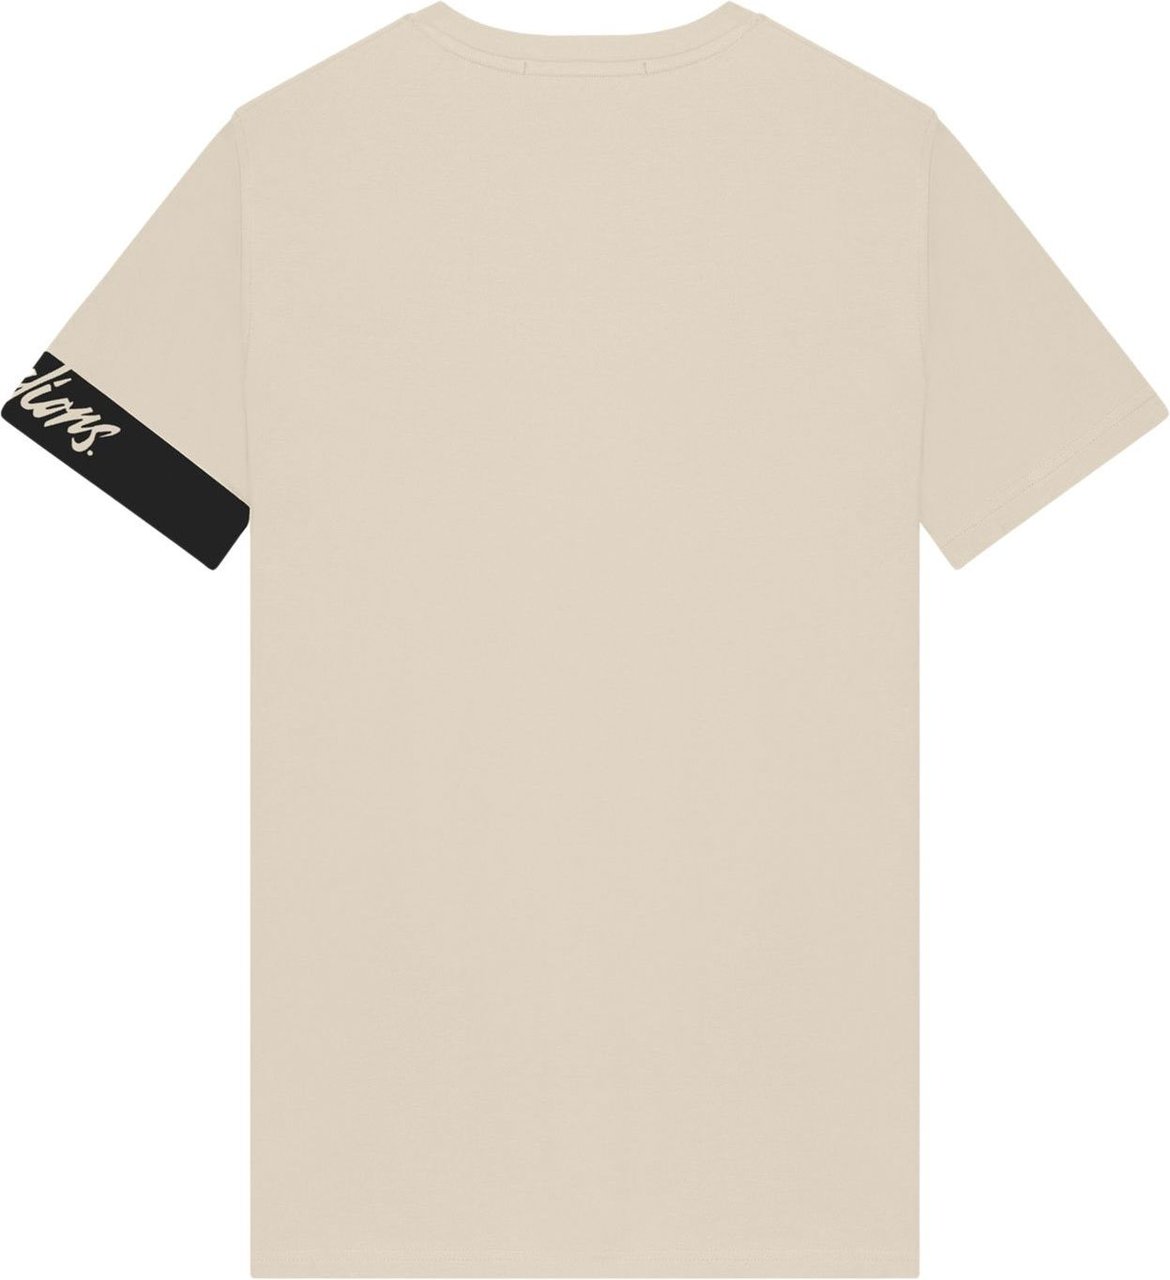 Malelions Captain T-Shirt 2 - Beige/Black Beige